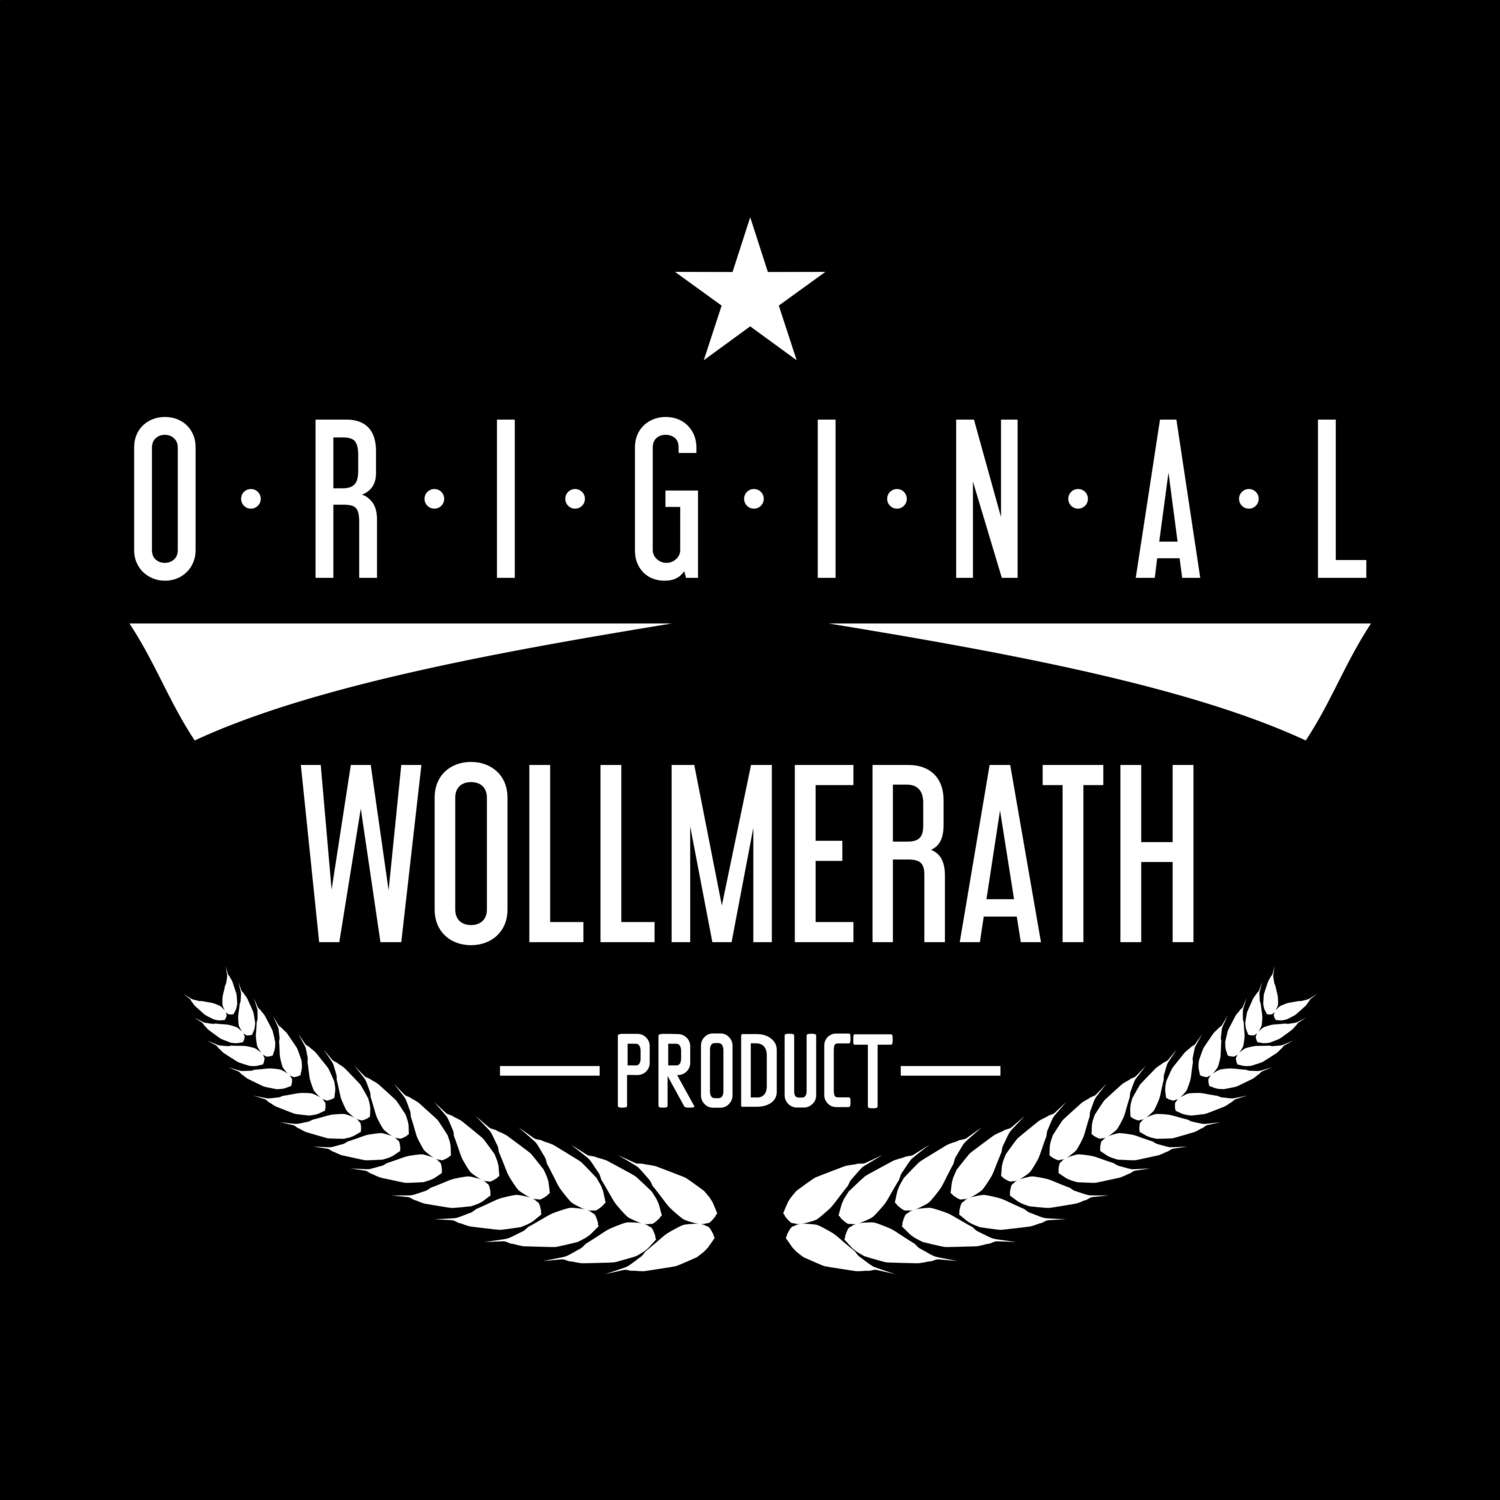 Wollmerath T-Shirt »Original Product«